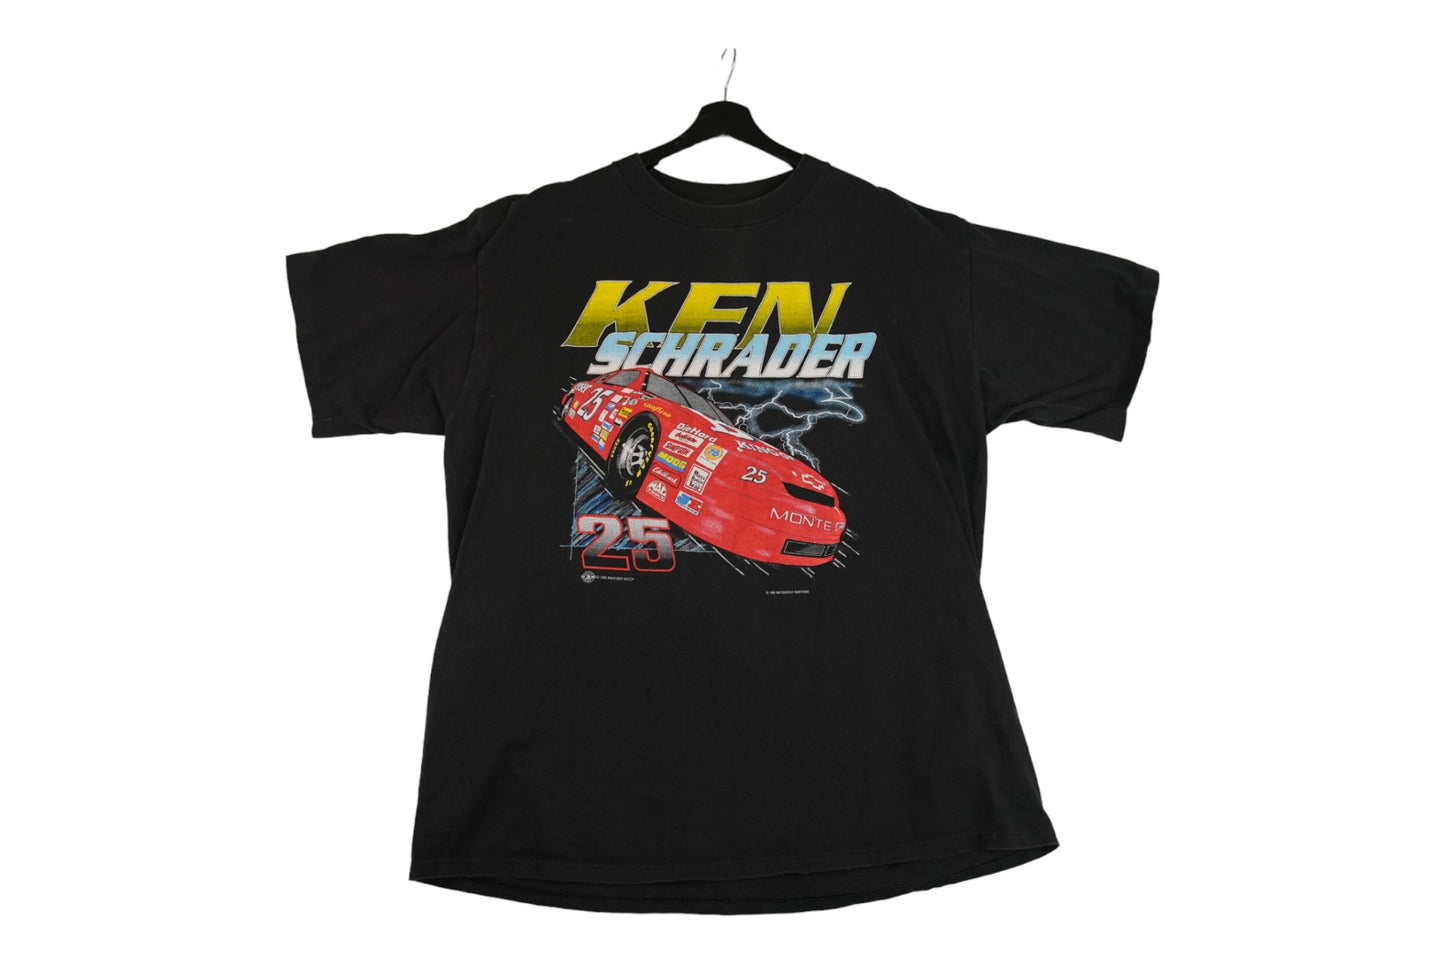 Ken Shrader Nascar T-Shirt